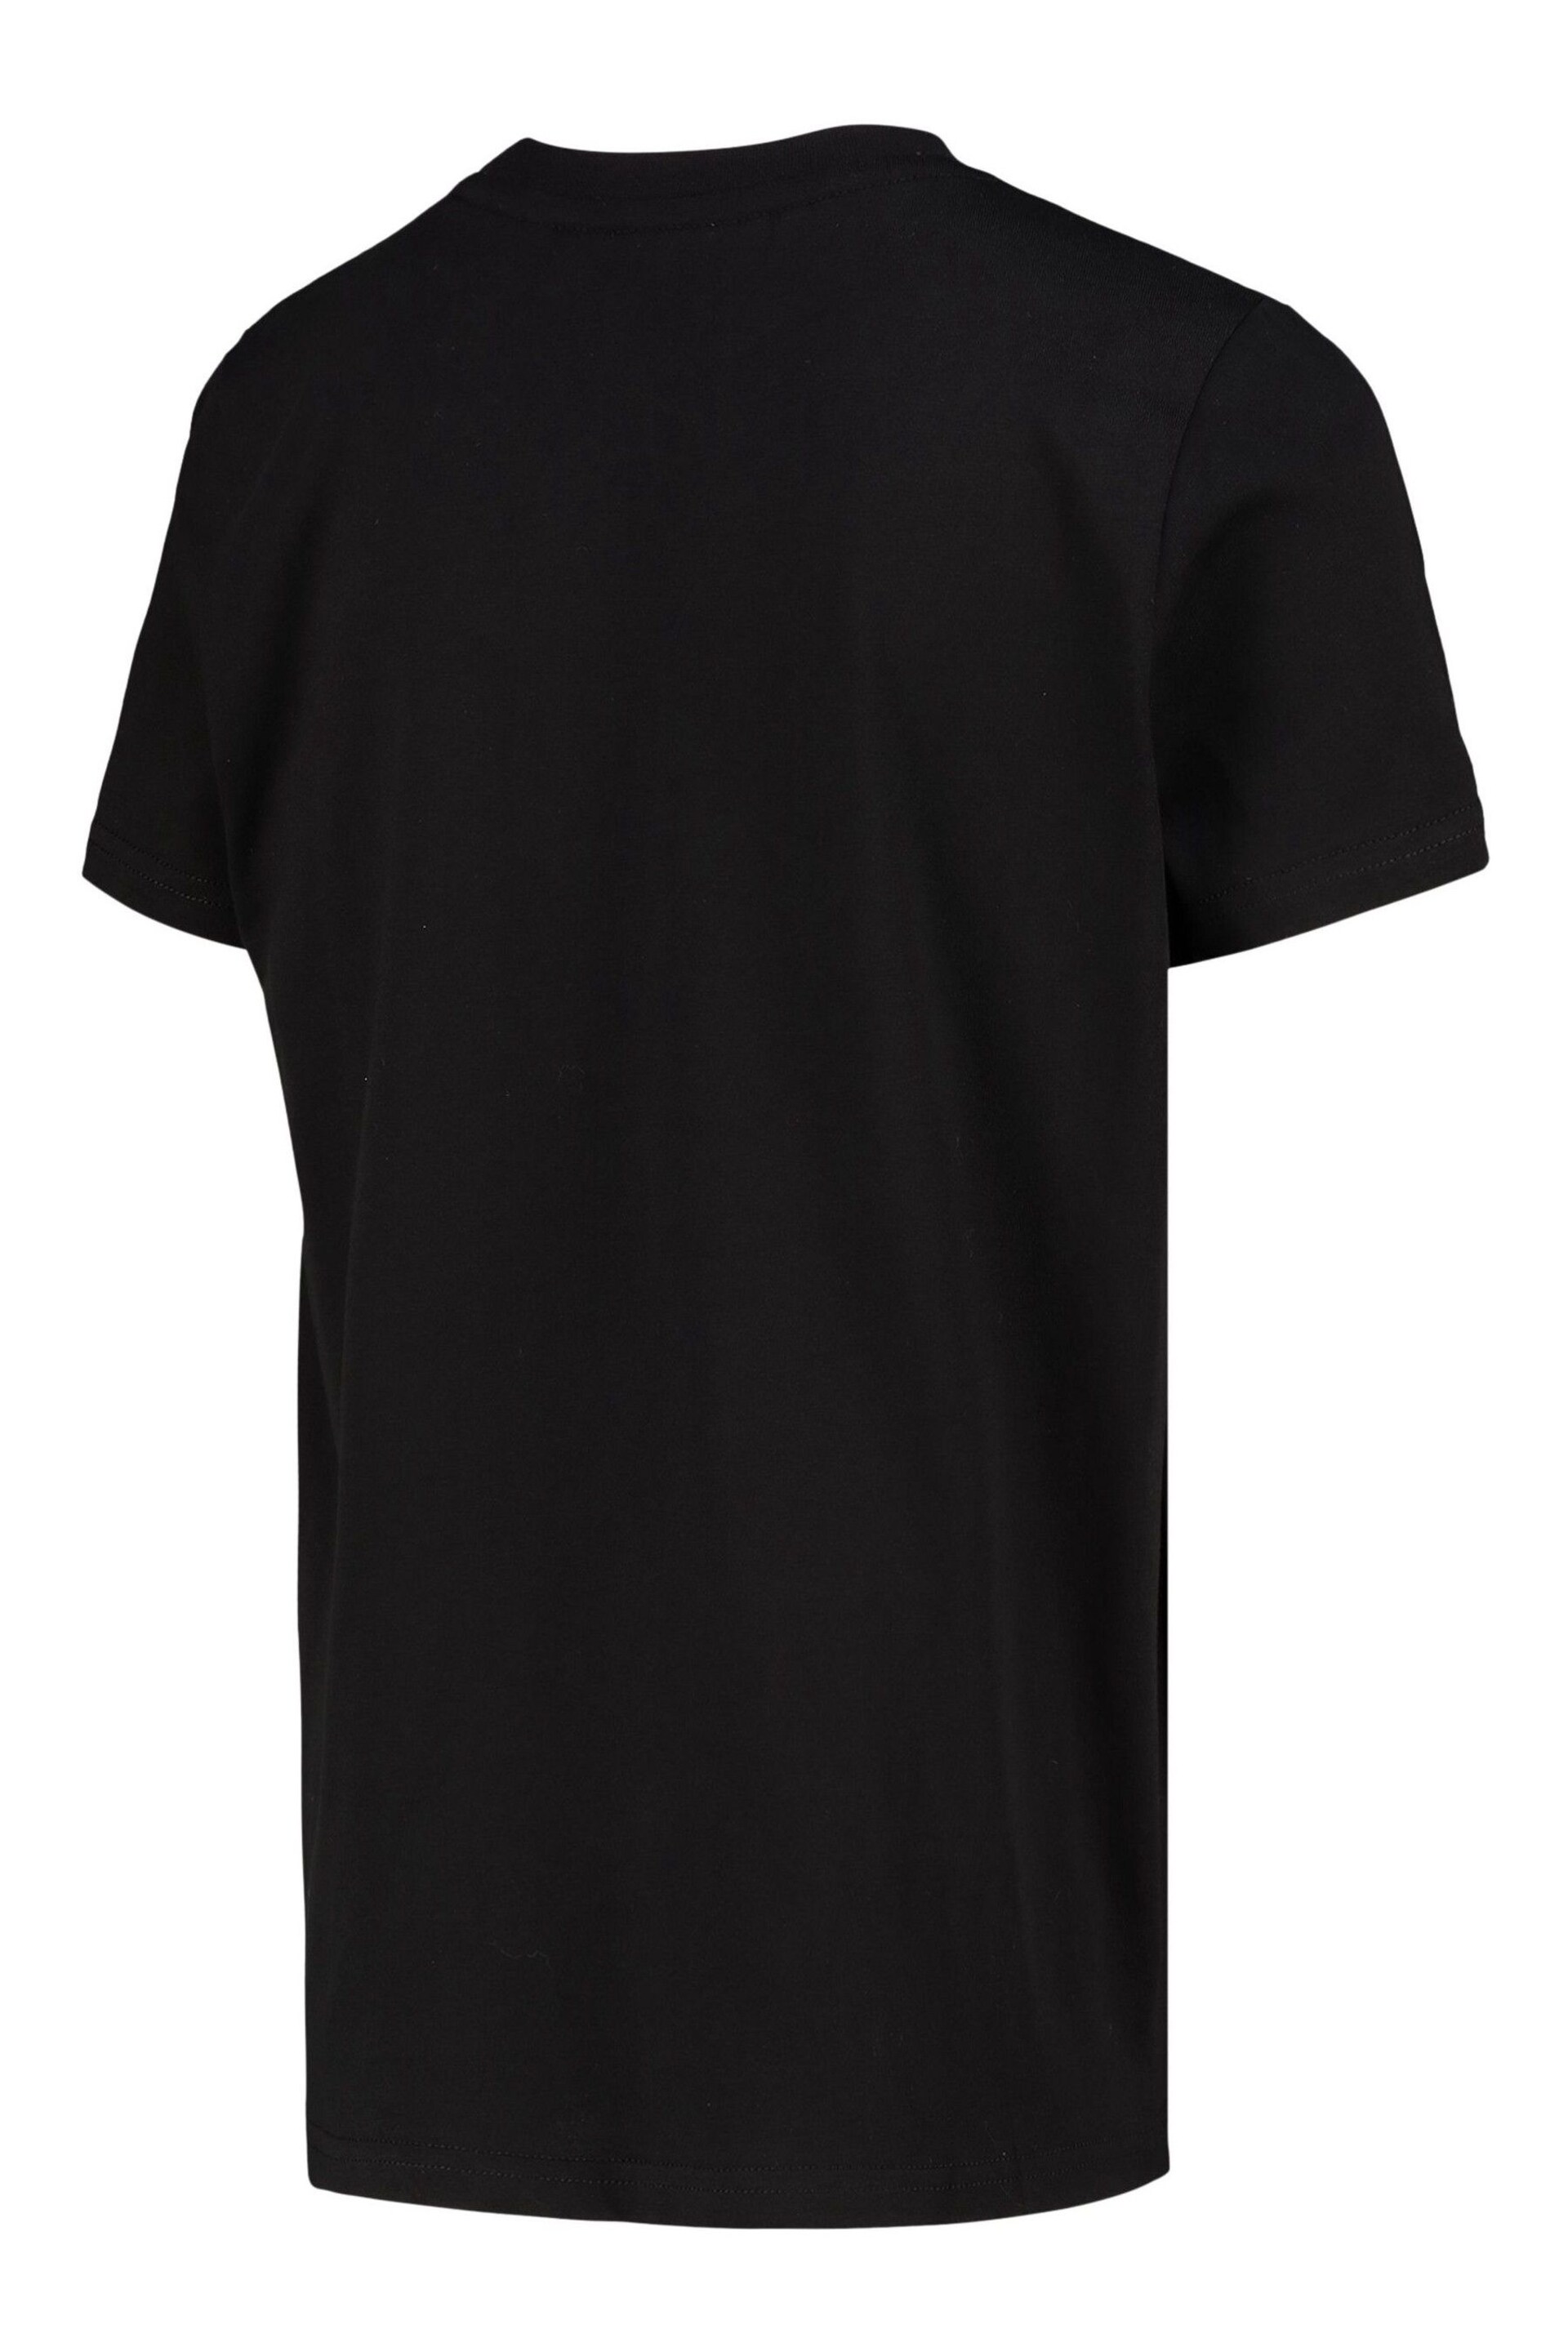 adidas Black England Tonal Reflective Graphic T-Shirt - Image 3 of 3